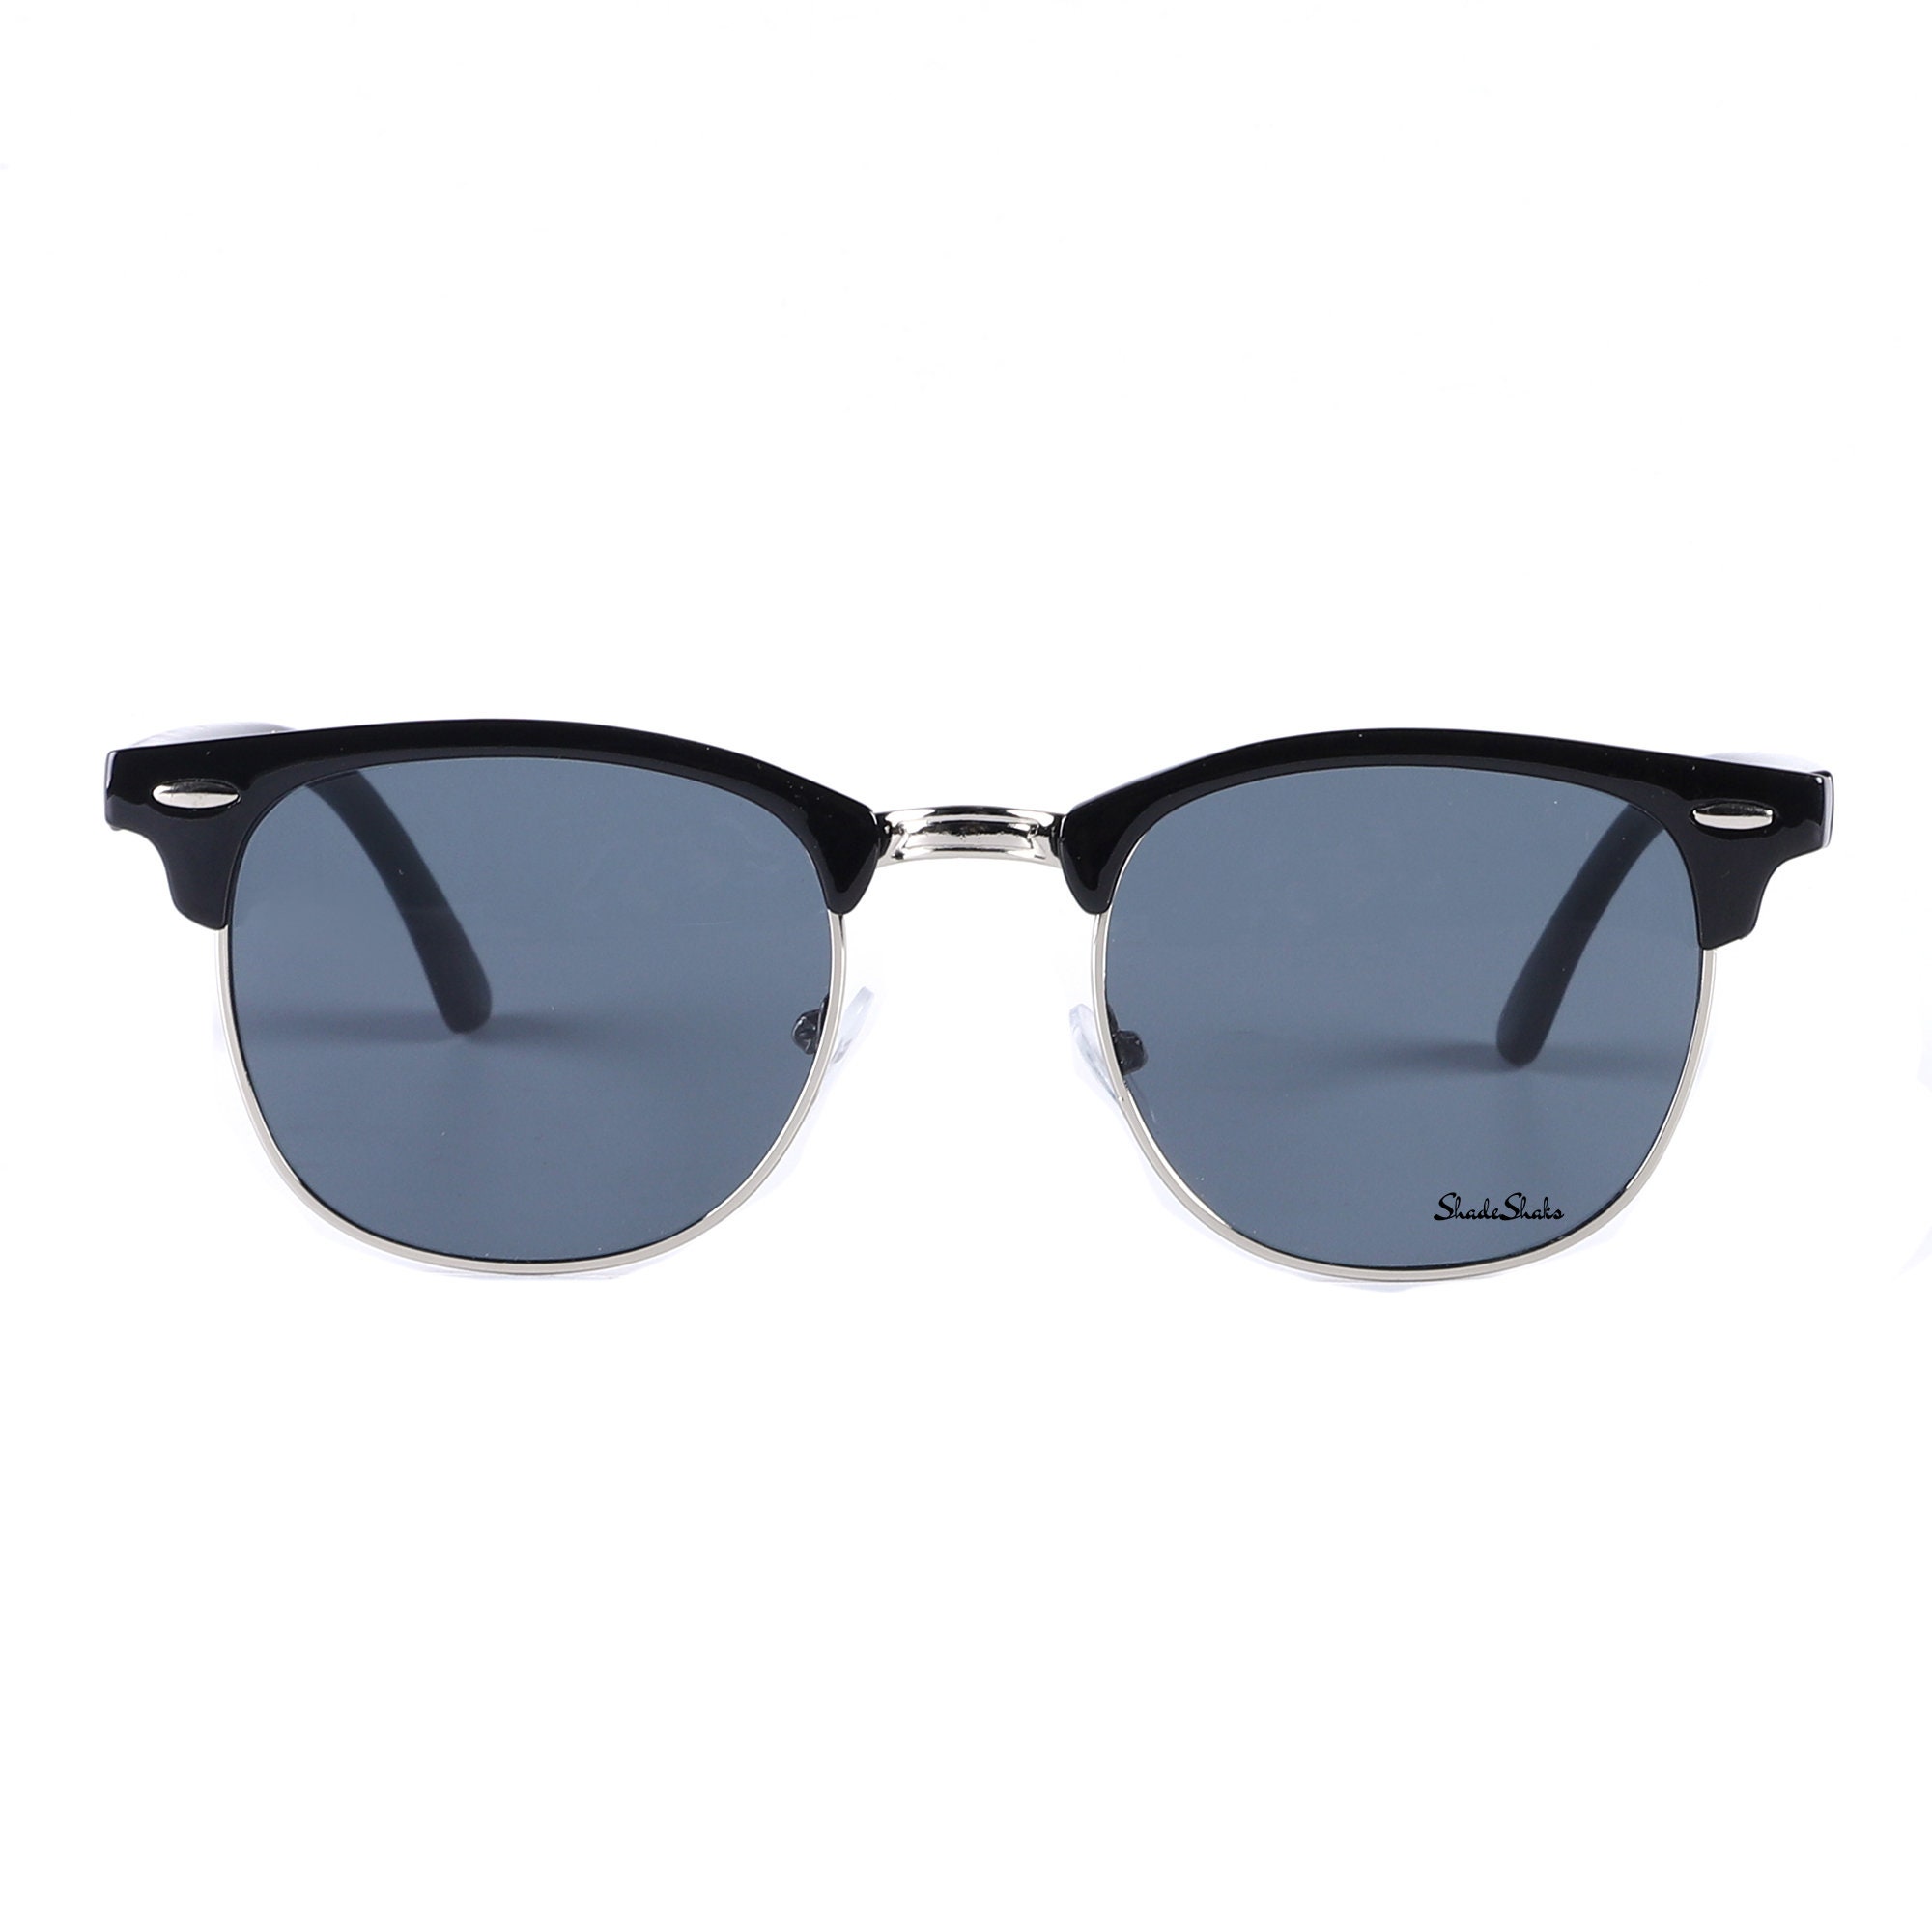 Ray-Ban Classic Wayfarer Sunglasses | Wayfarer sunglasses, Rayban wayfarer,  Wayfarer glasses